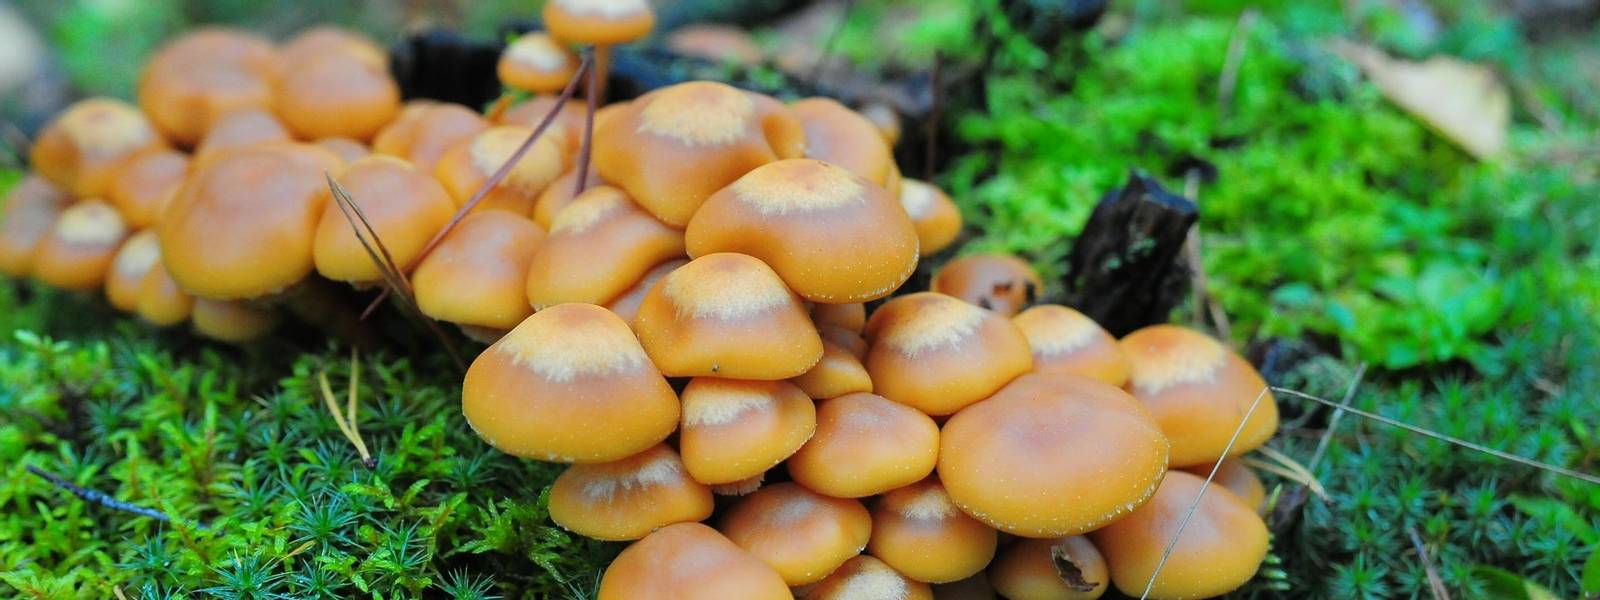 Clump of Honey Fungus (Armillaria mellea) in Ancient Woodland in Rural Devon, England, UK